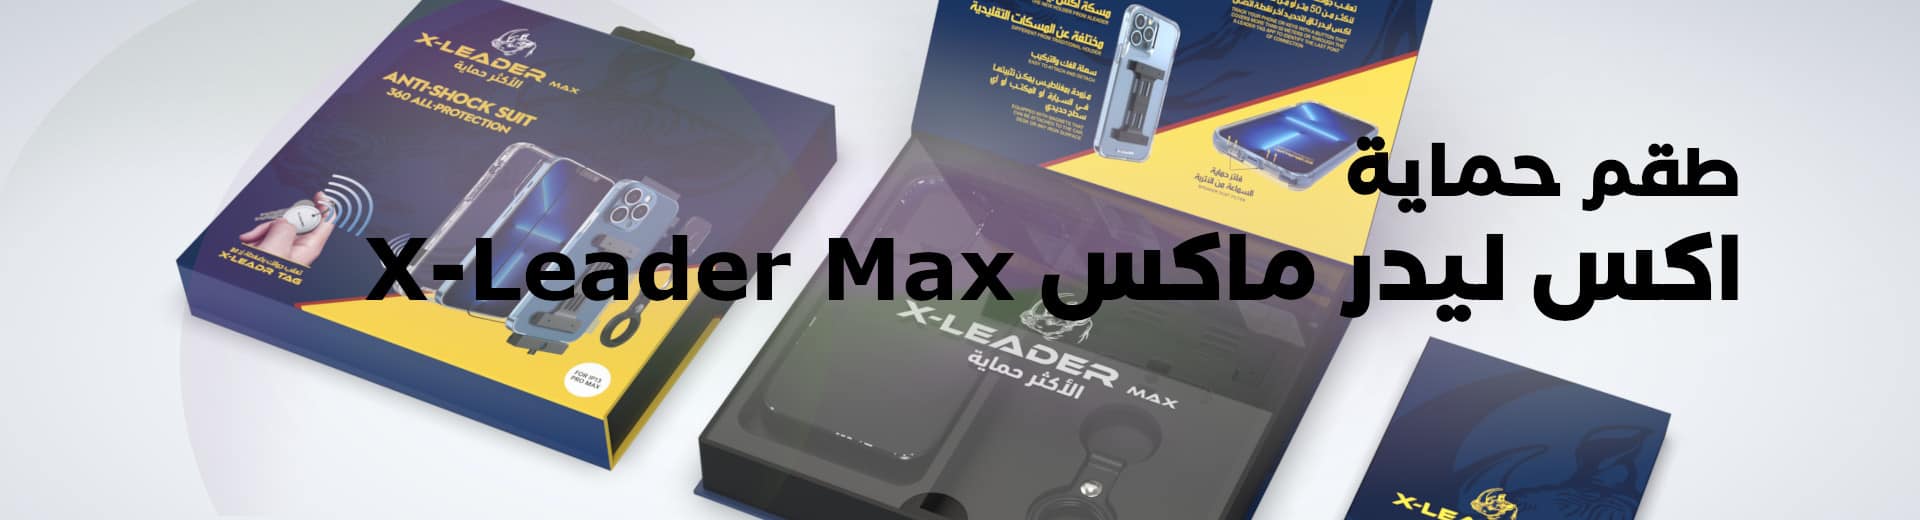 X-Leader-Max